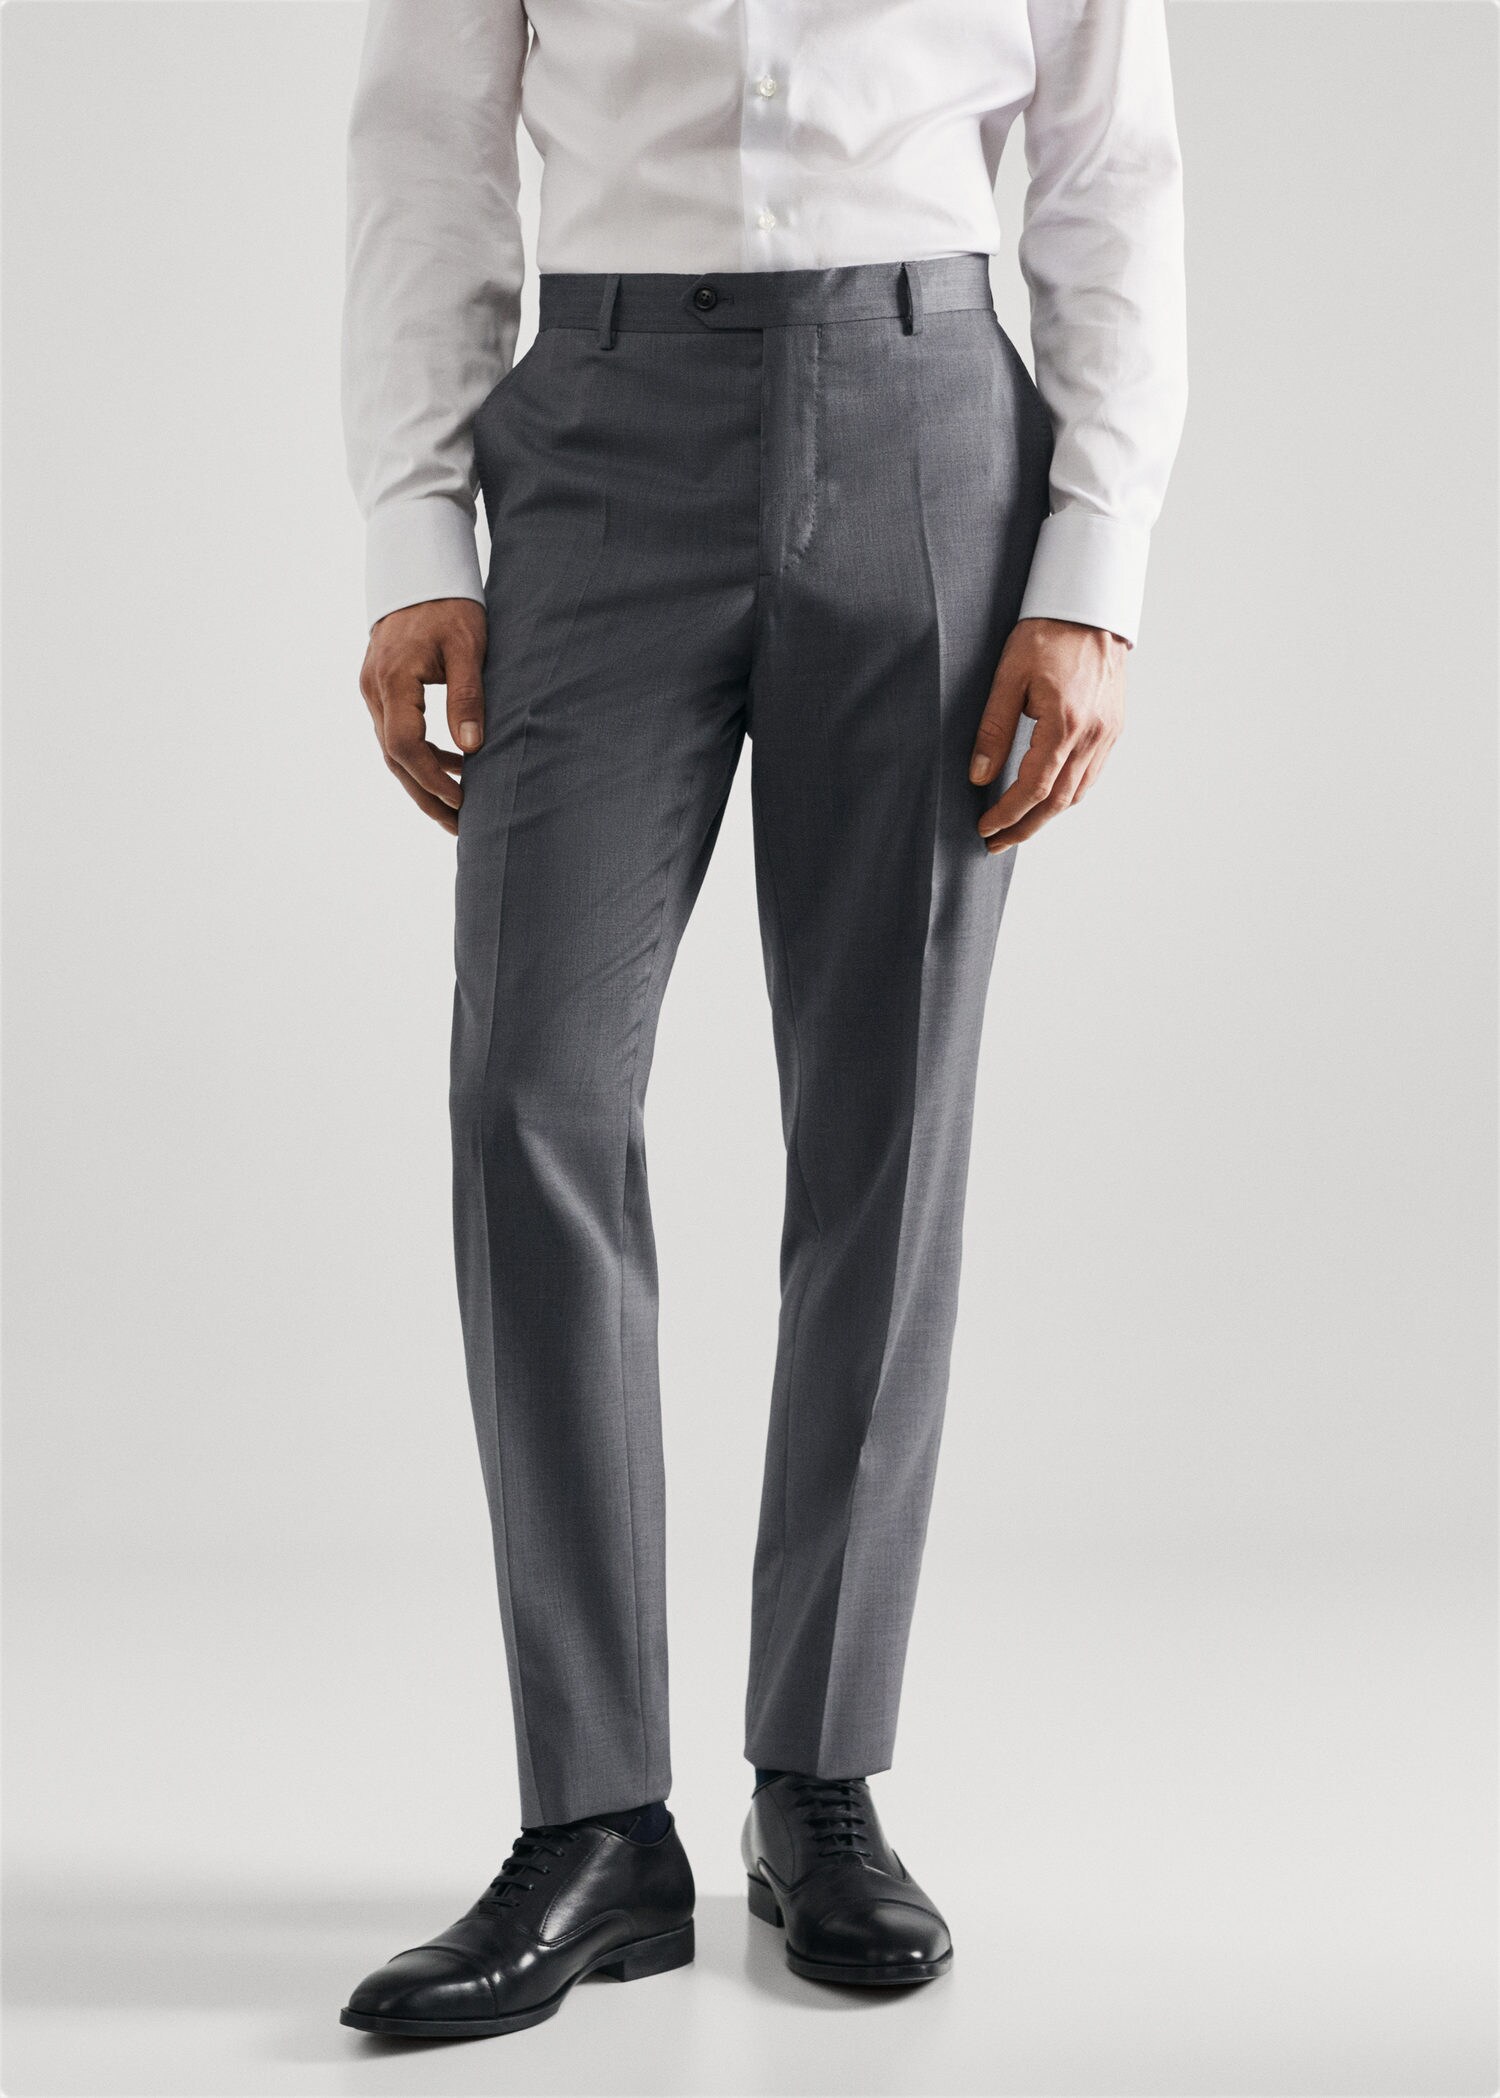 Pantalón traje slim fit lana virgen - Plano medio